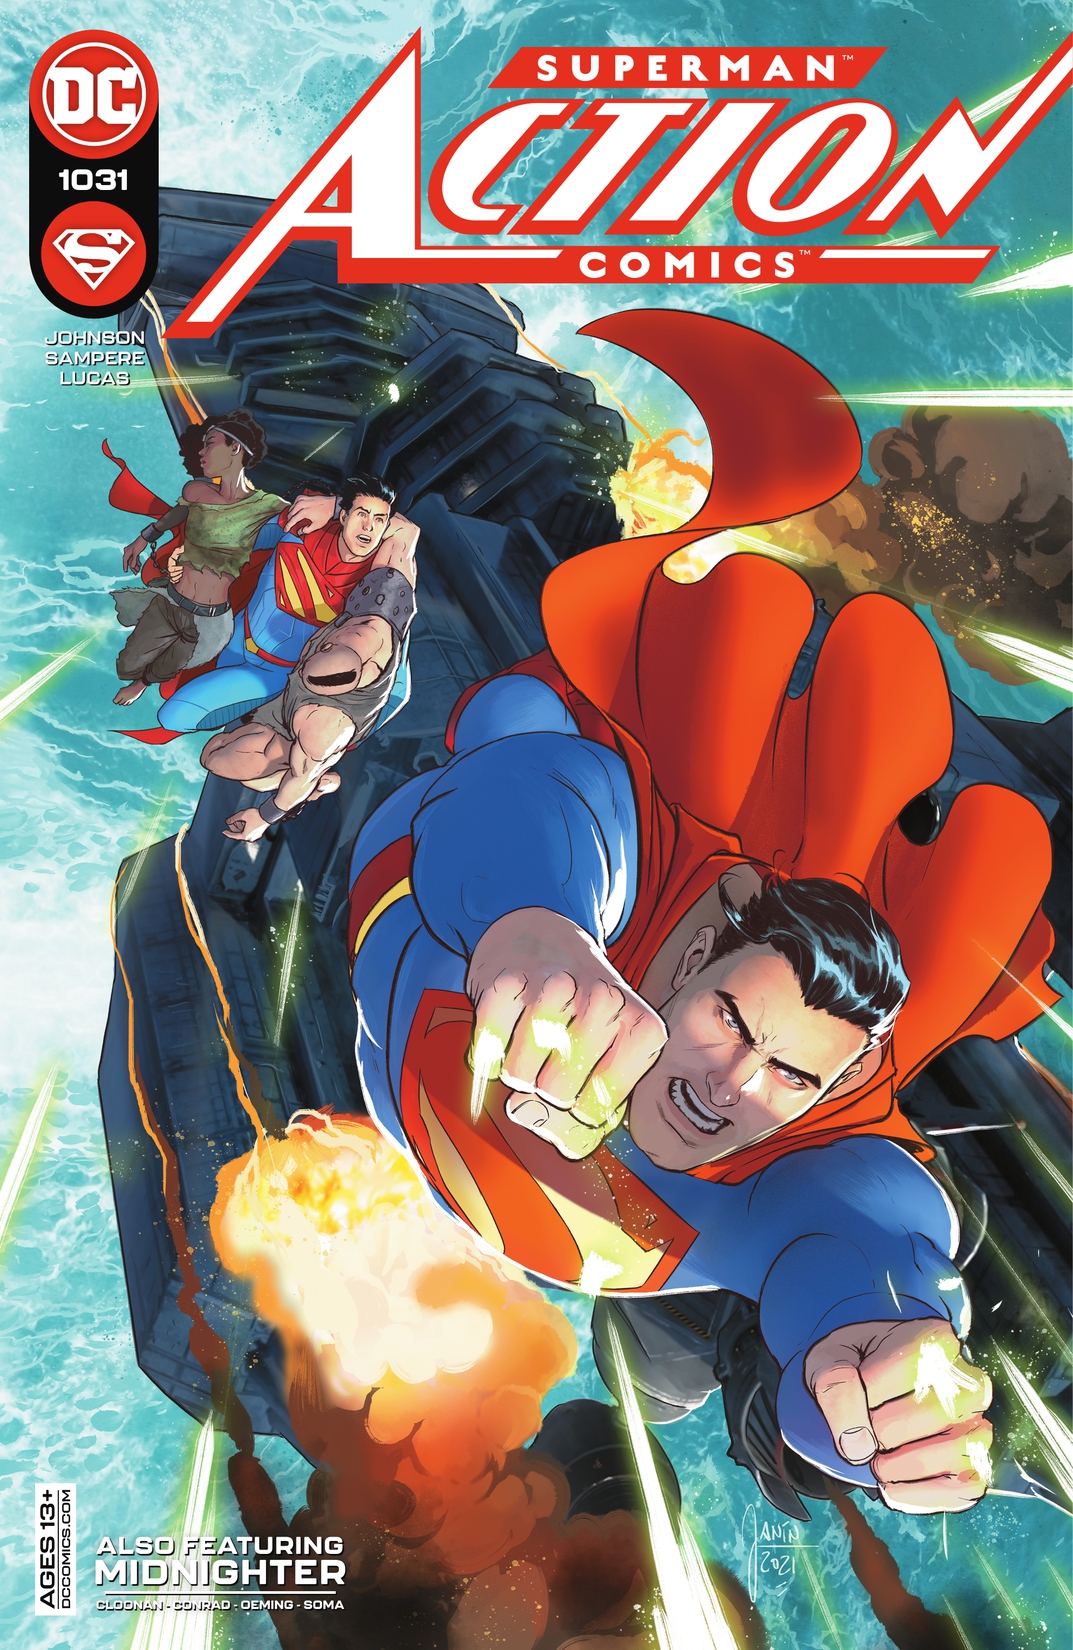 Action Comics (2016-) #1031 preview images